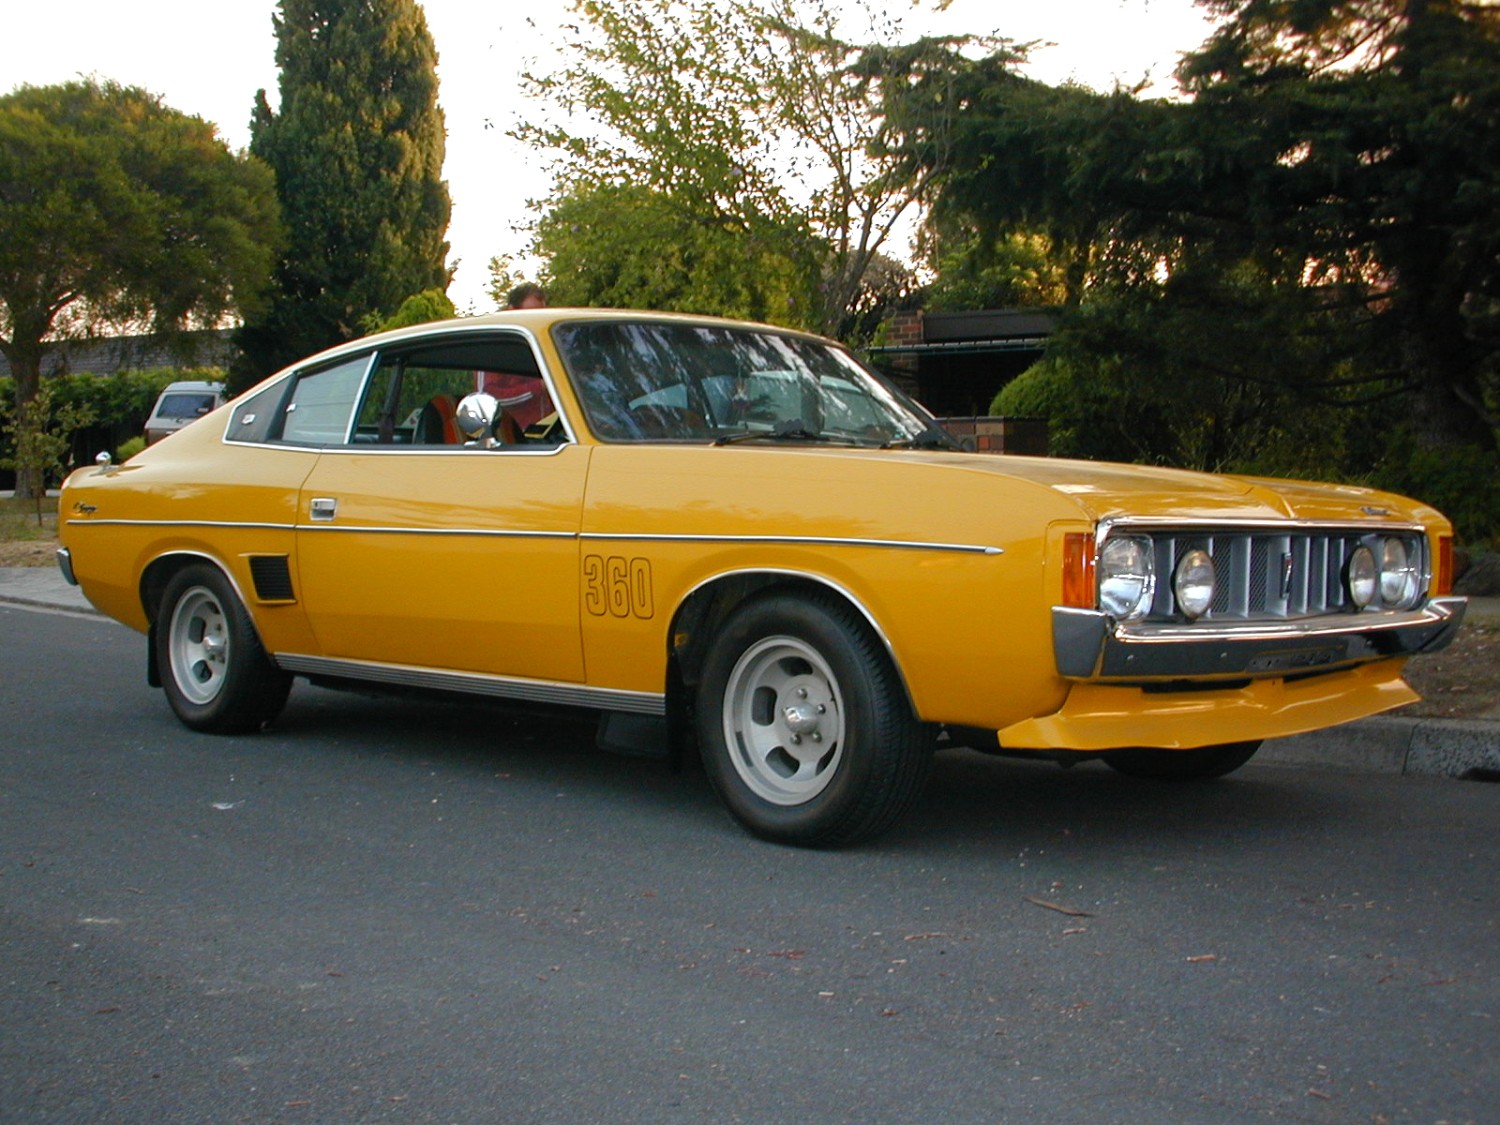 1974 Chrysler CHARGER 770